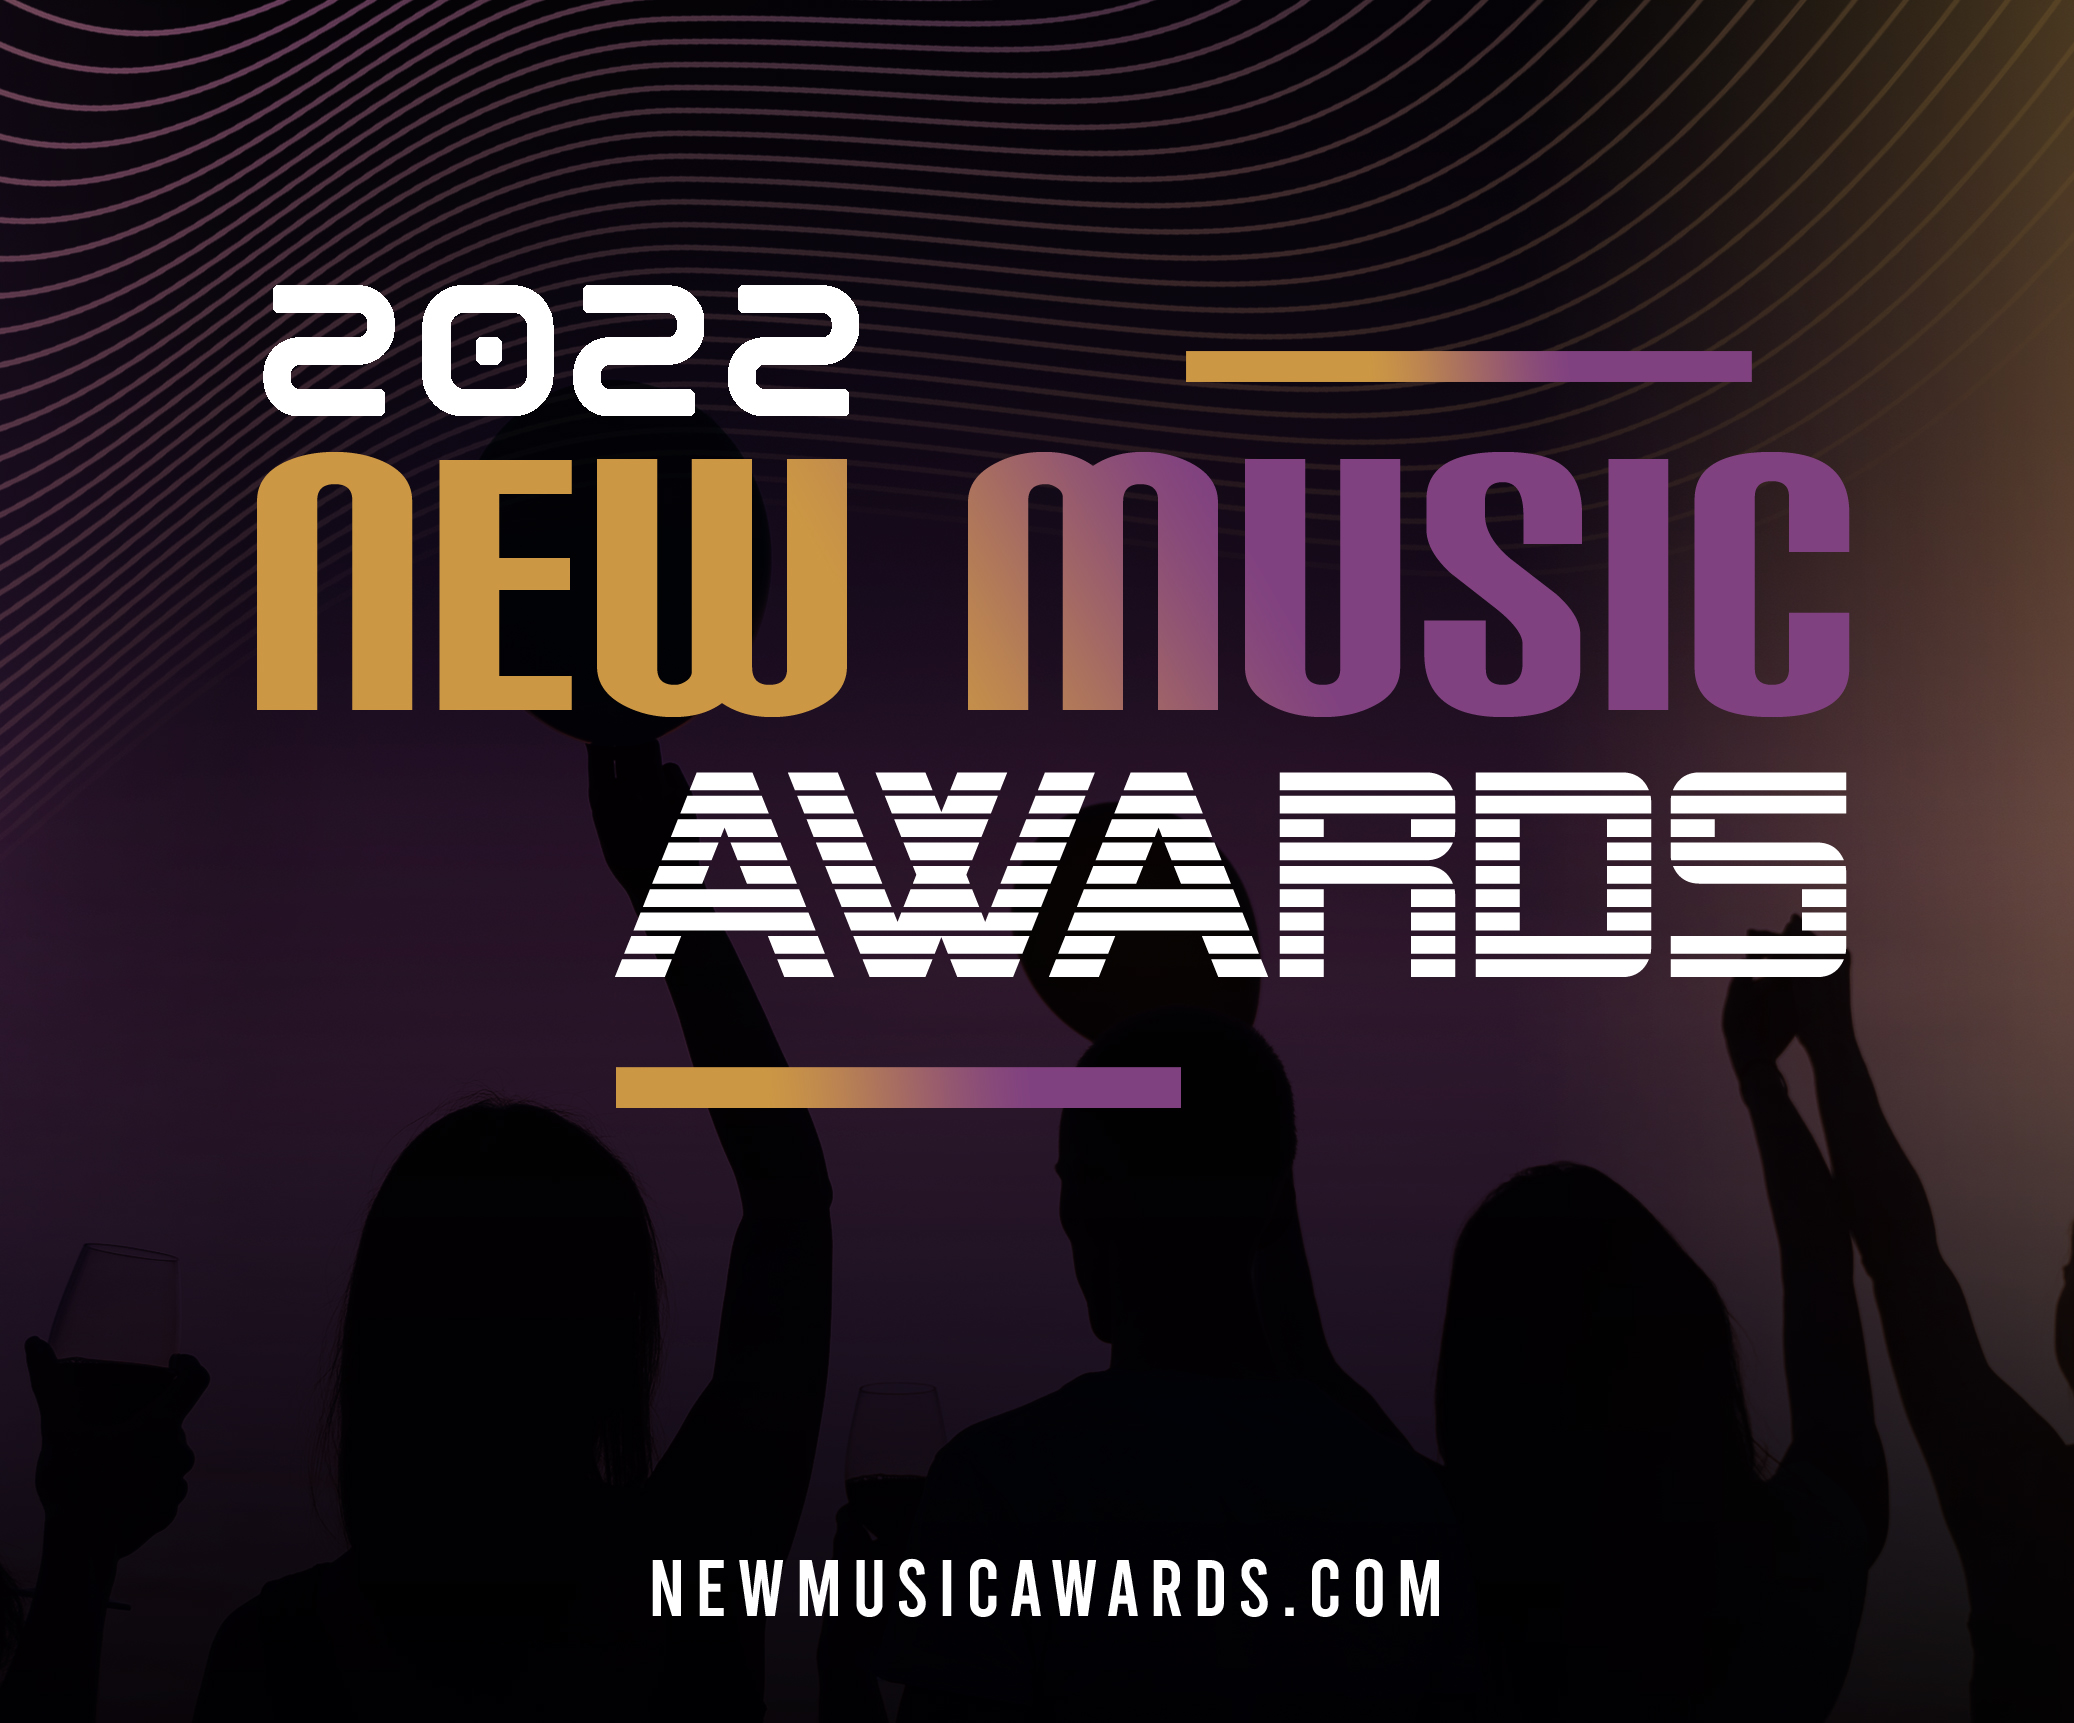 New Music Awards 2022